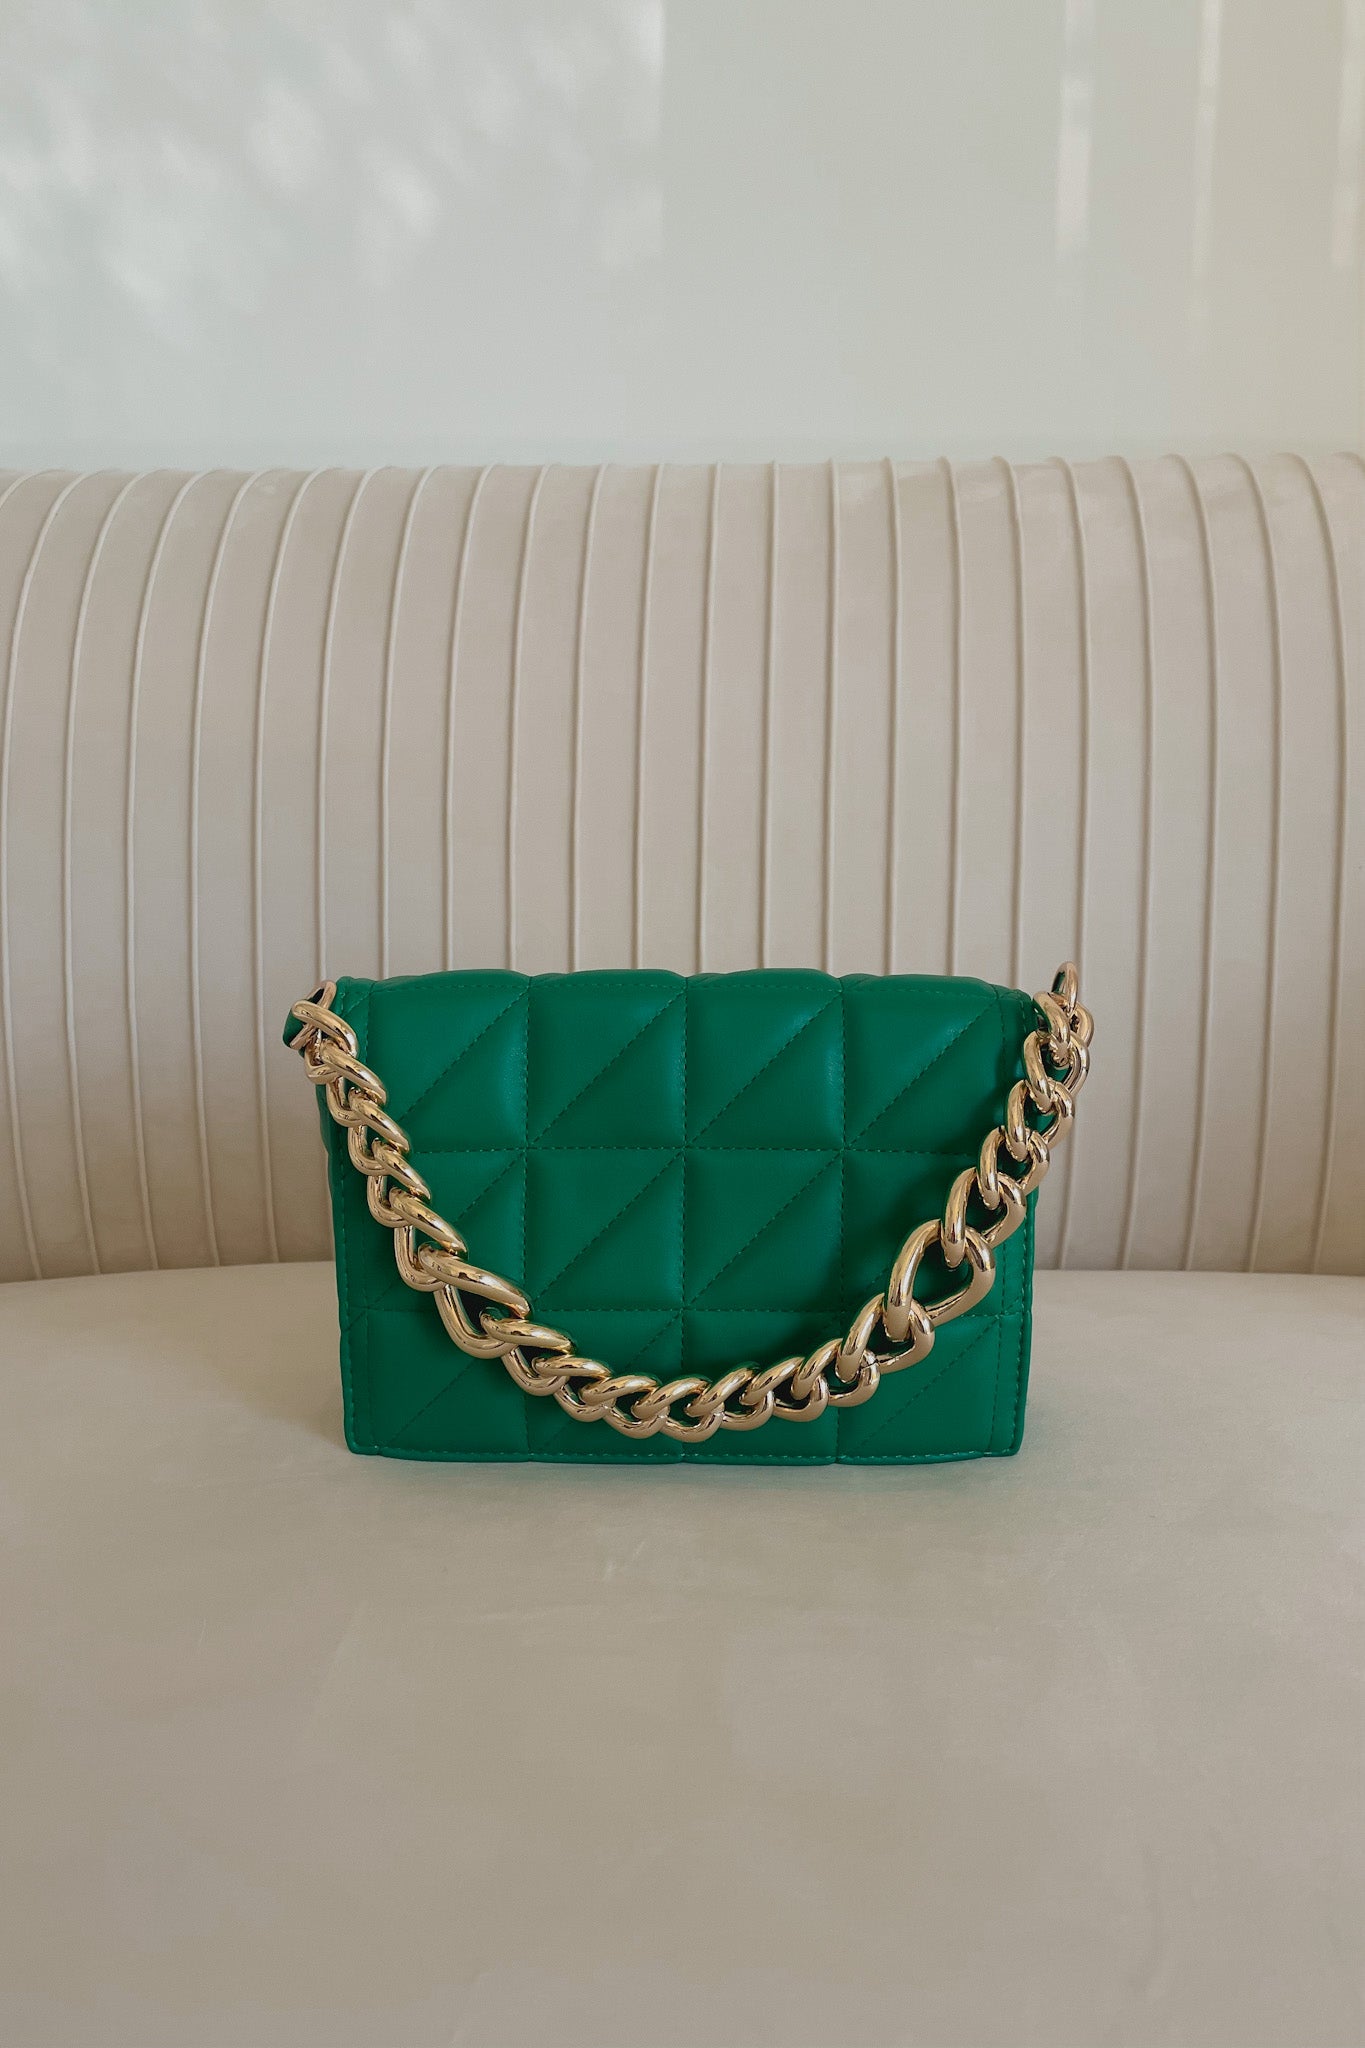 Zara gold sling bag | Zara bags, Sling bag, Zara handbags